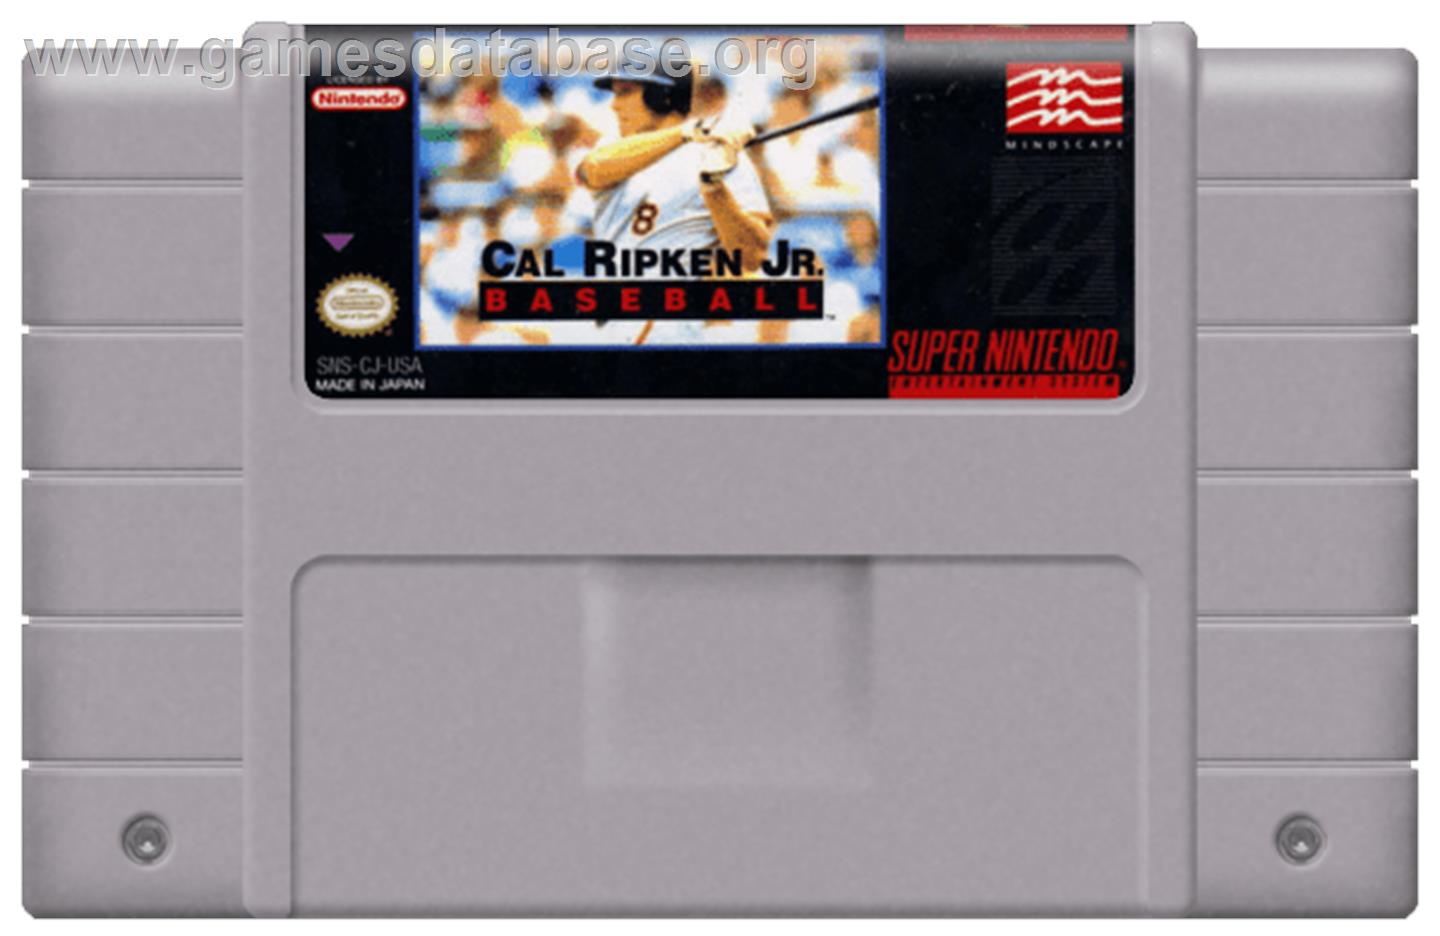 Cal Ripken Jr. Baseball - Nintendo SNES - Artwork - Cartridge